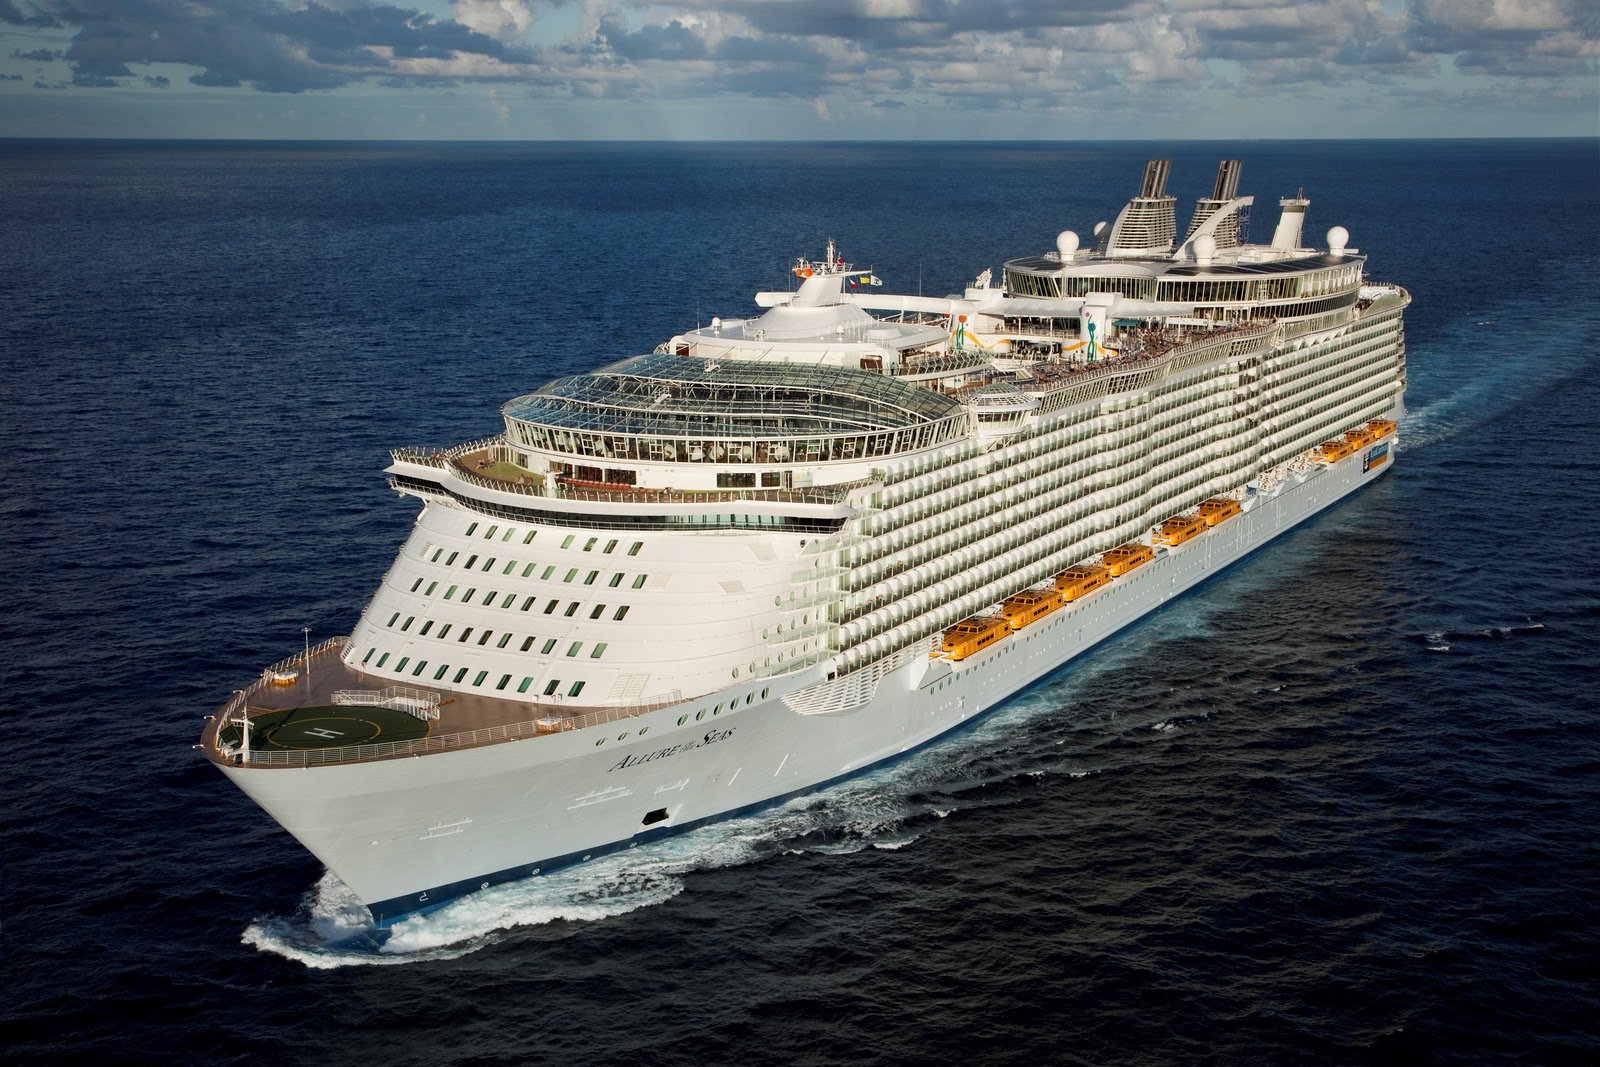 When Tara Met Blog: Tips for Cruising on Royal Caribbean